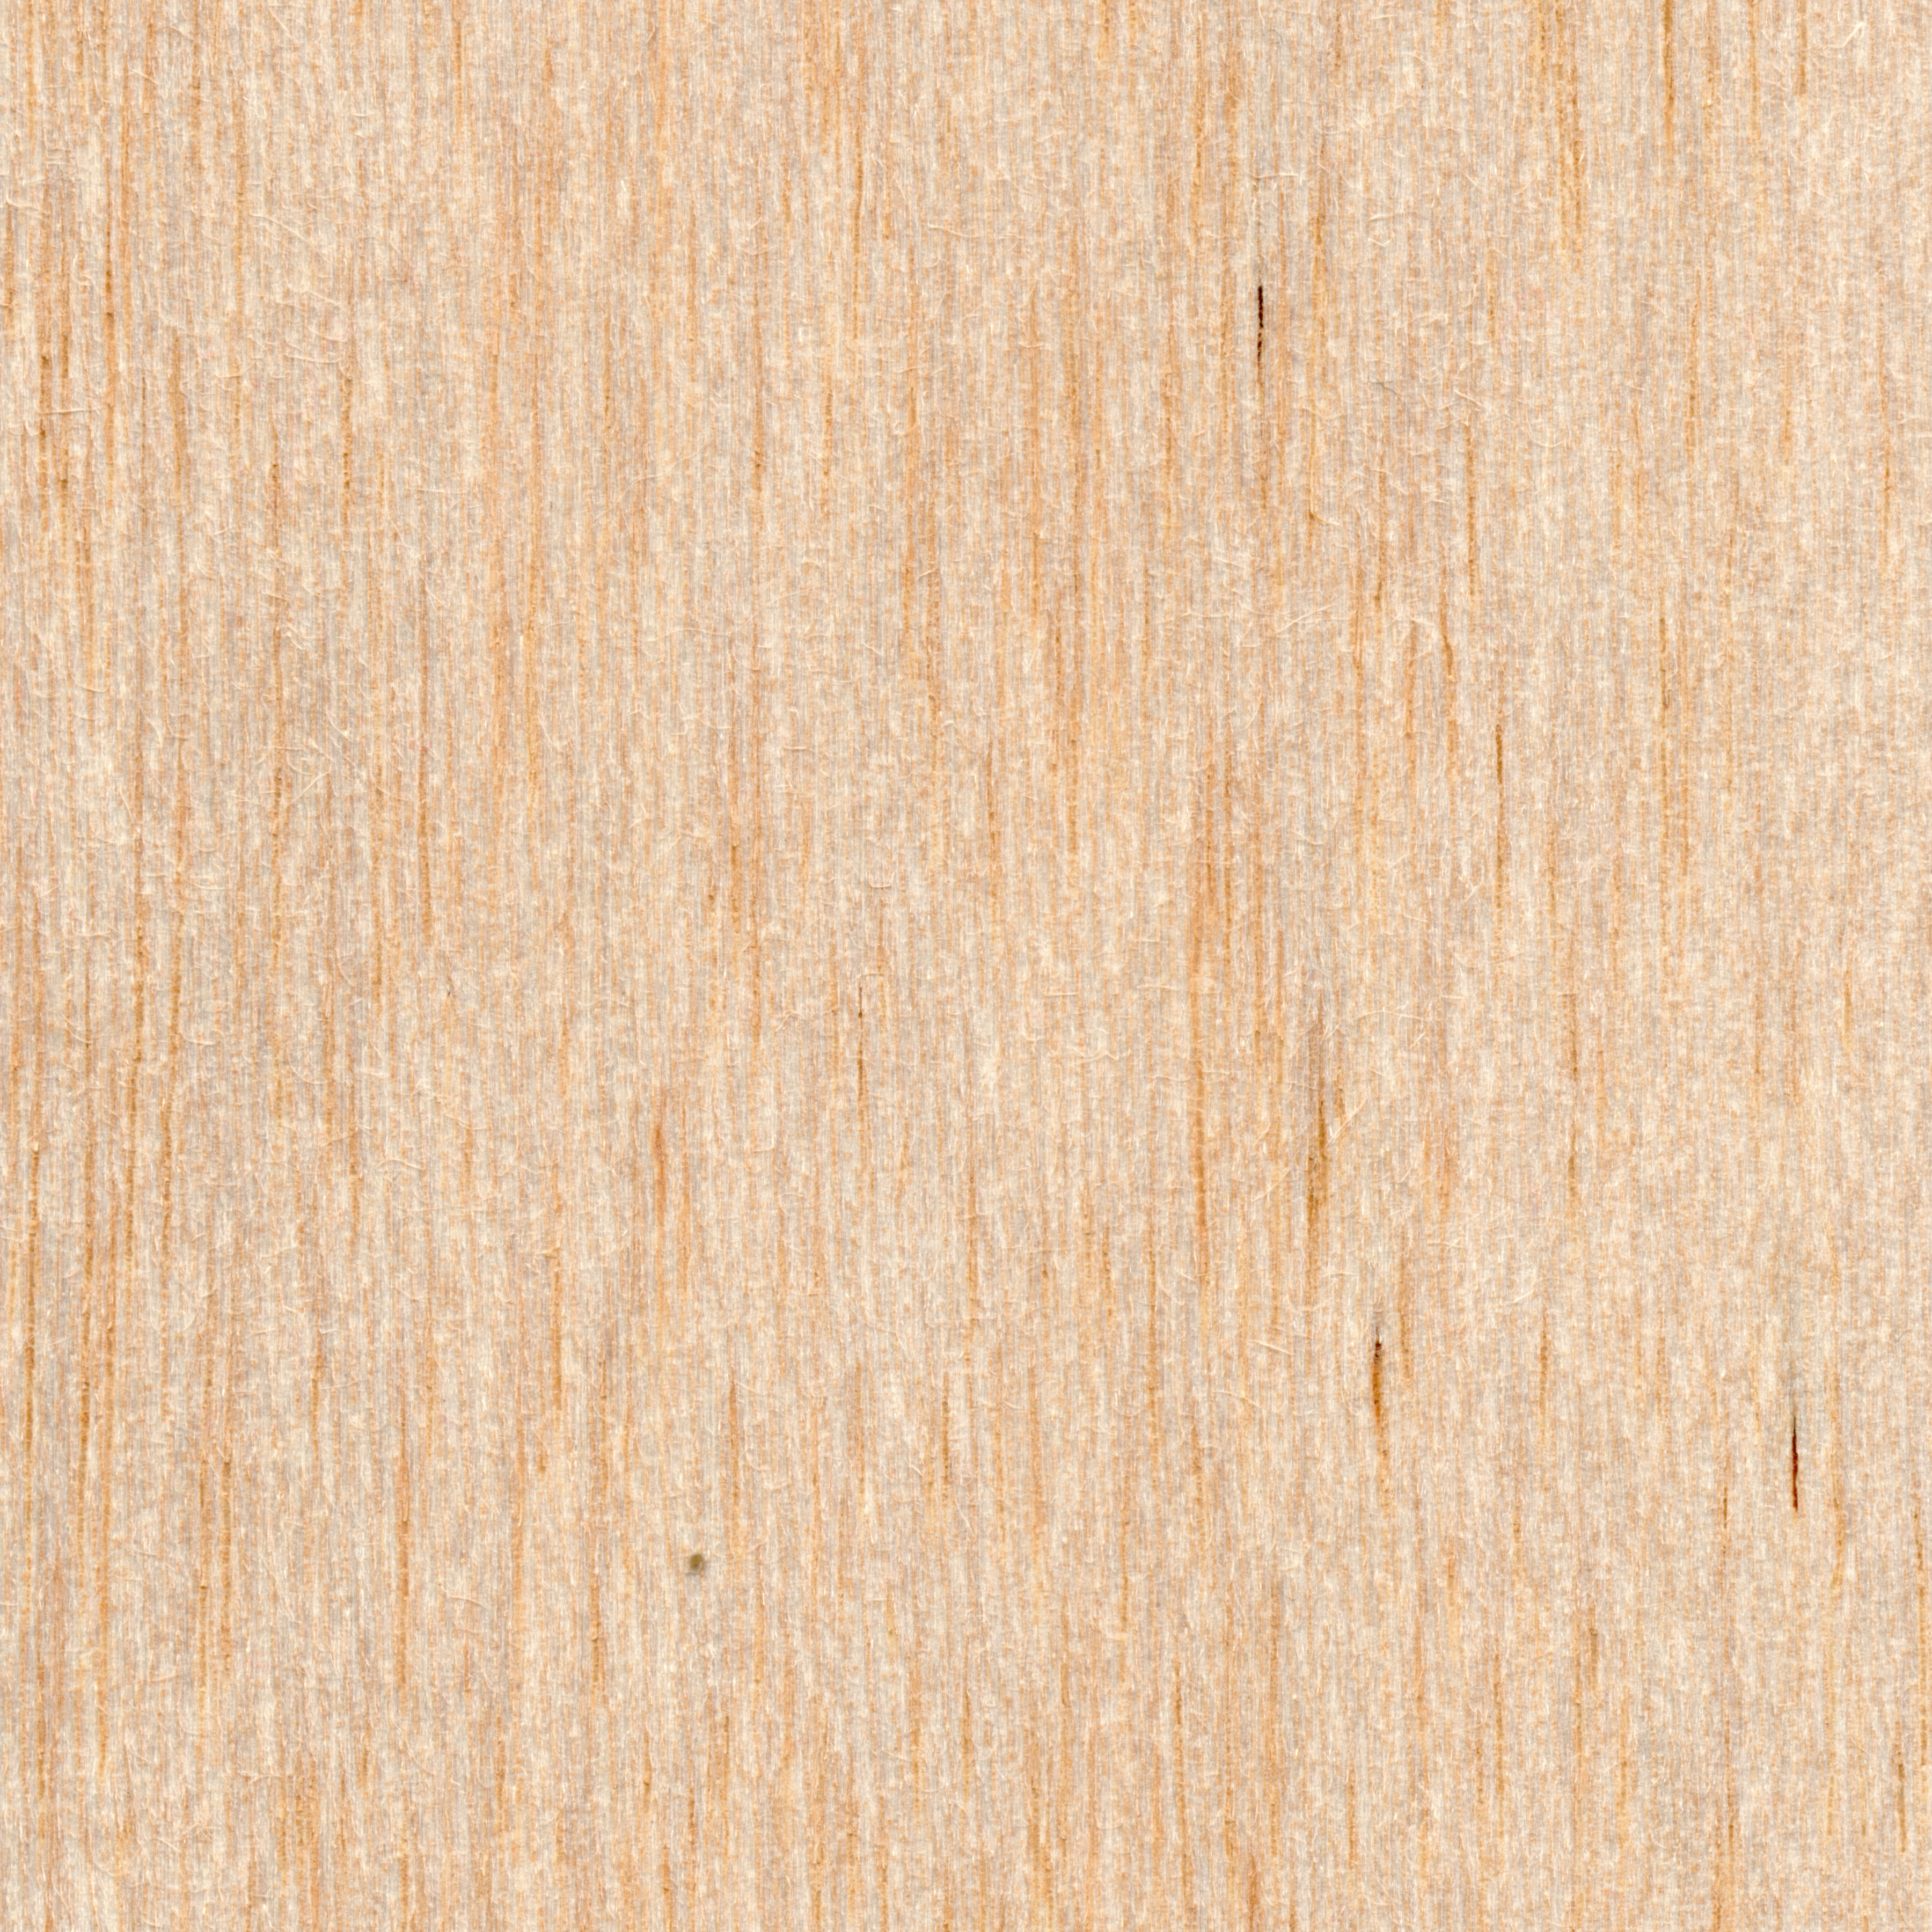 File:Balsa Wood Texture.jpg - Wikimedia Commons